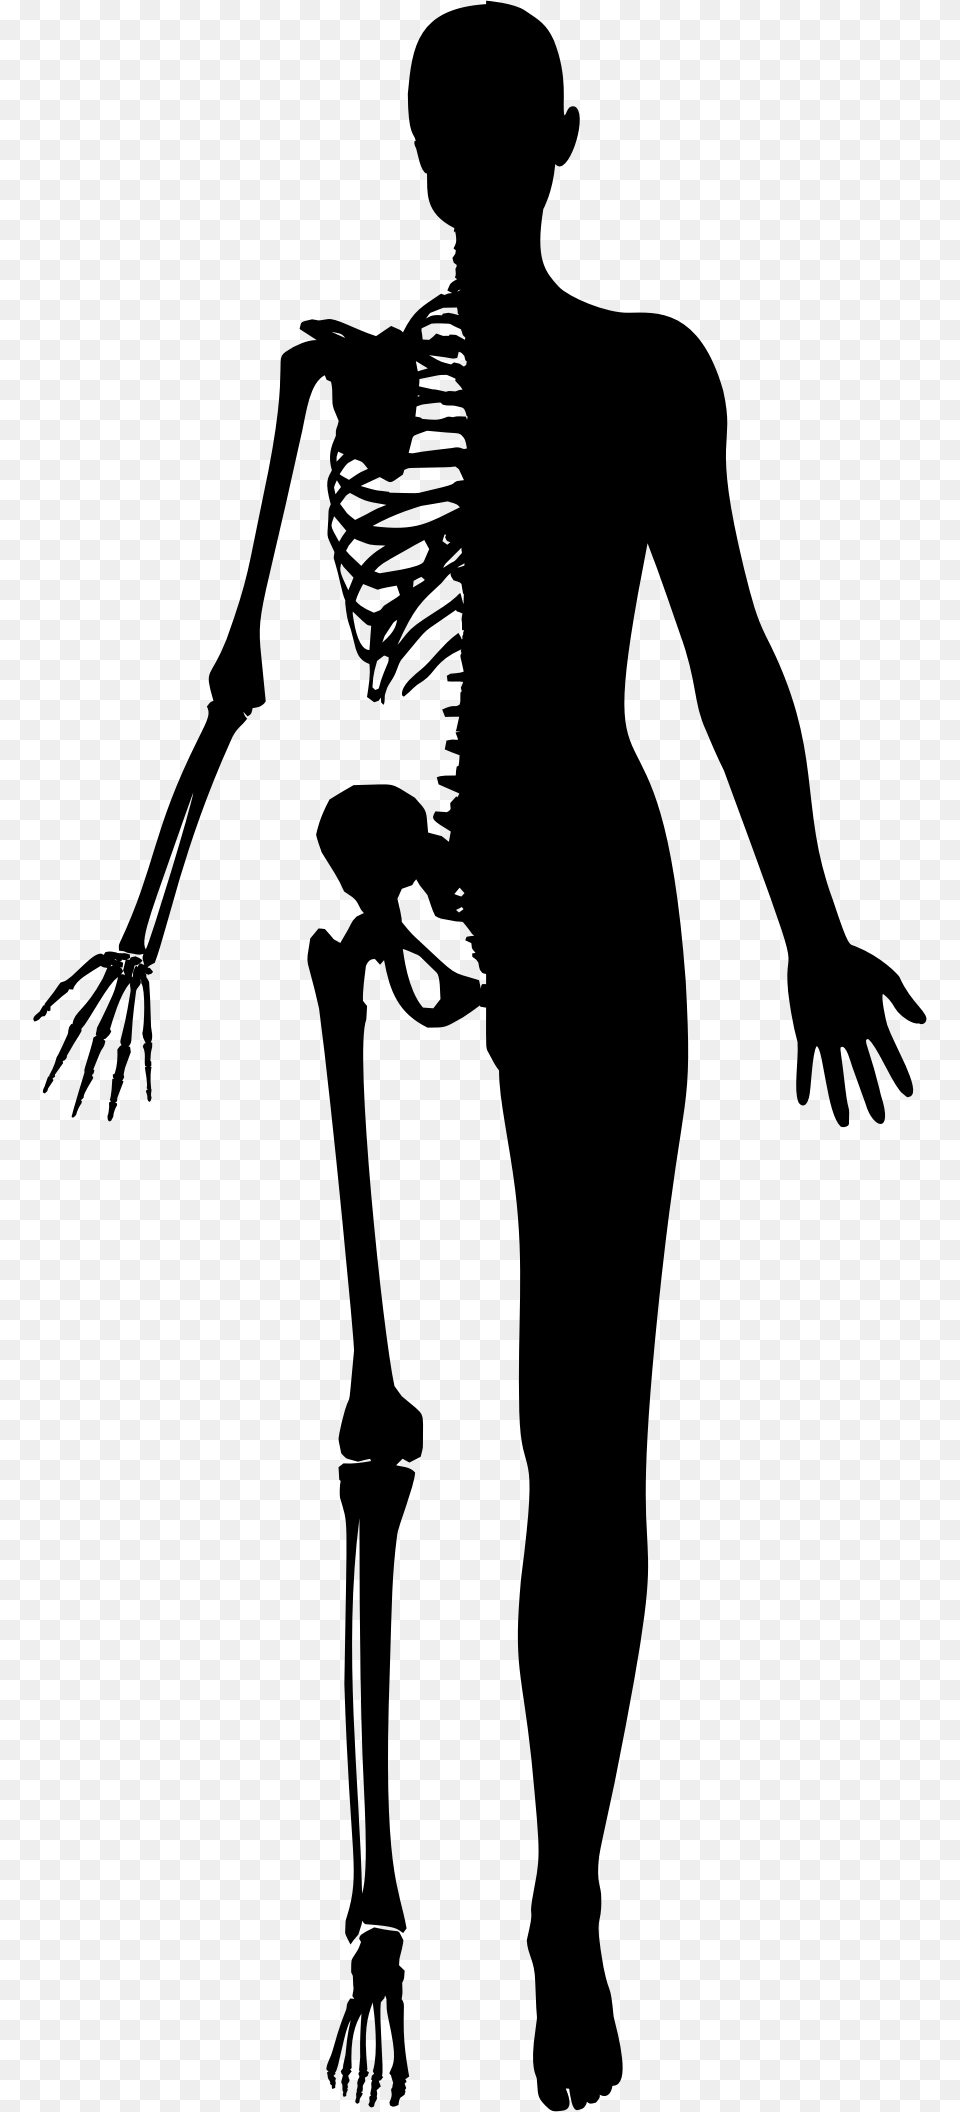 Half Woman Half Skeleton Silhouette Clip Arts Half Human Half Skeleton, Gray Png Image